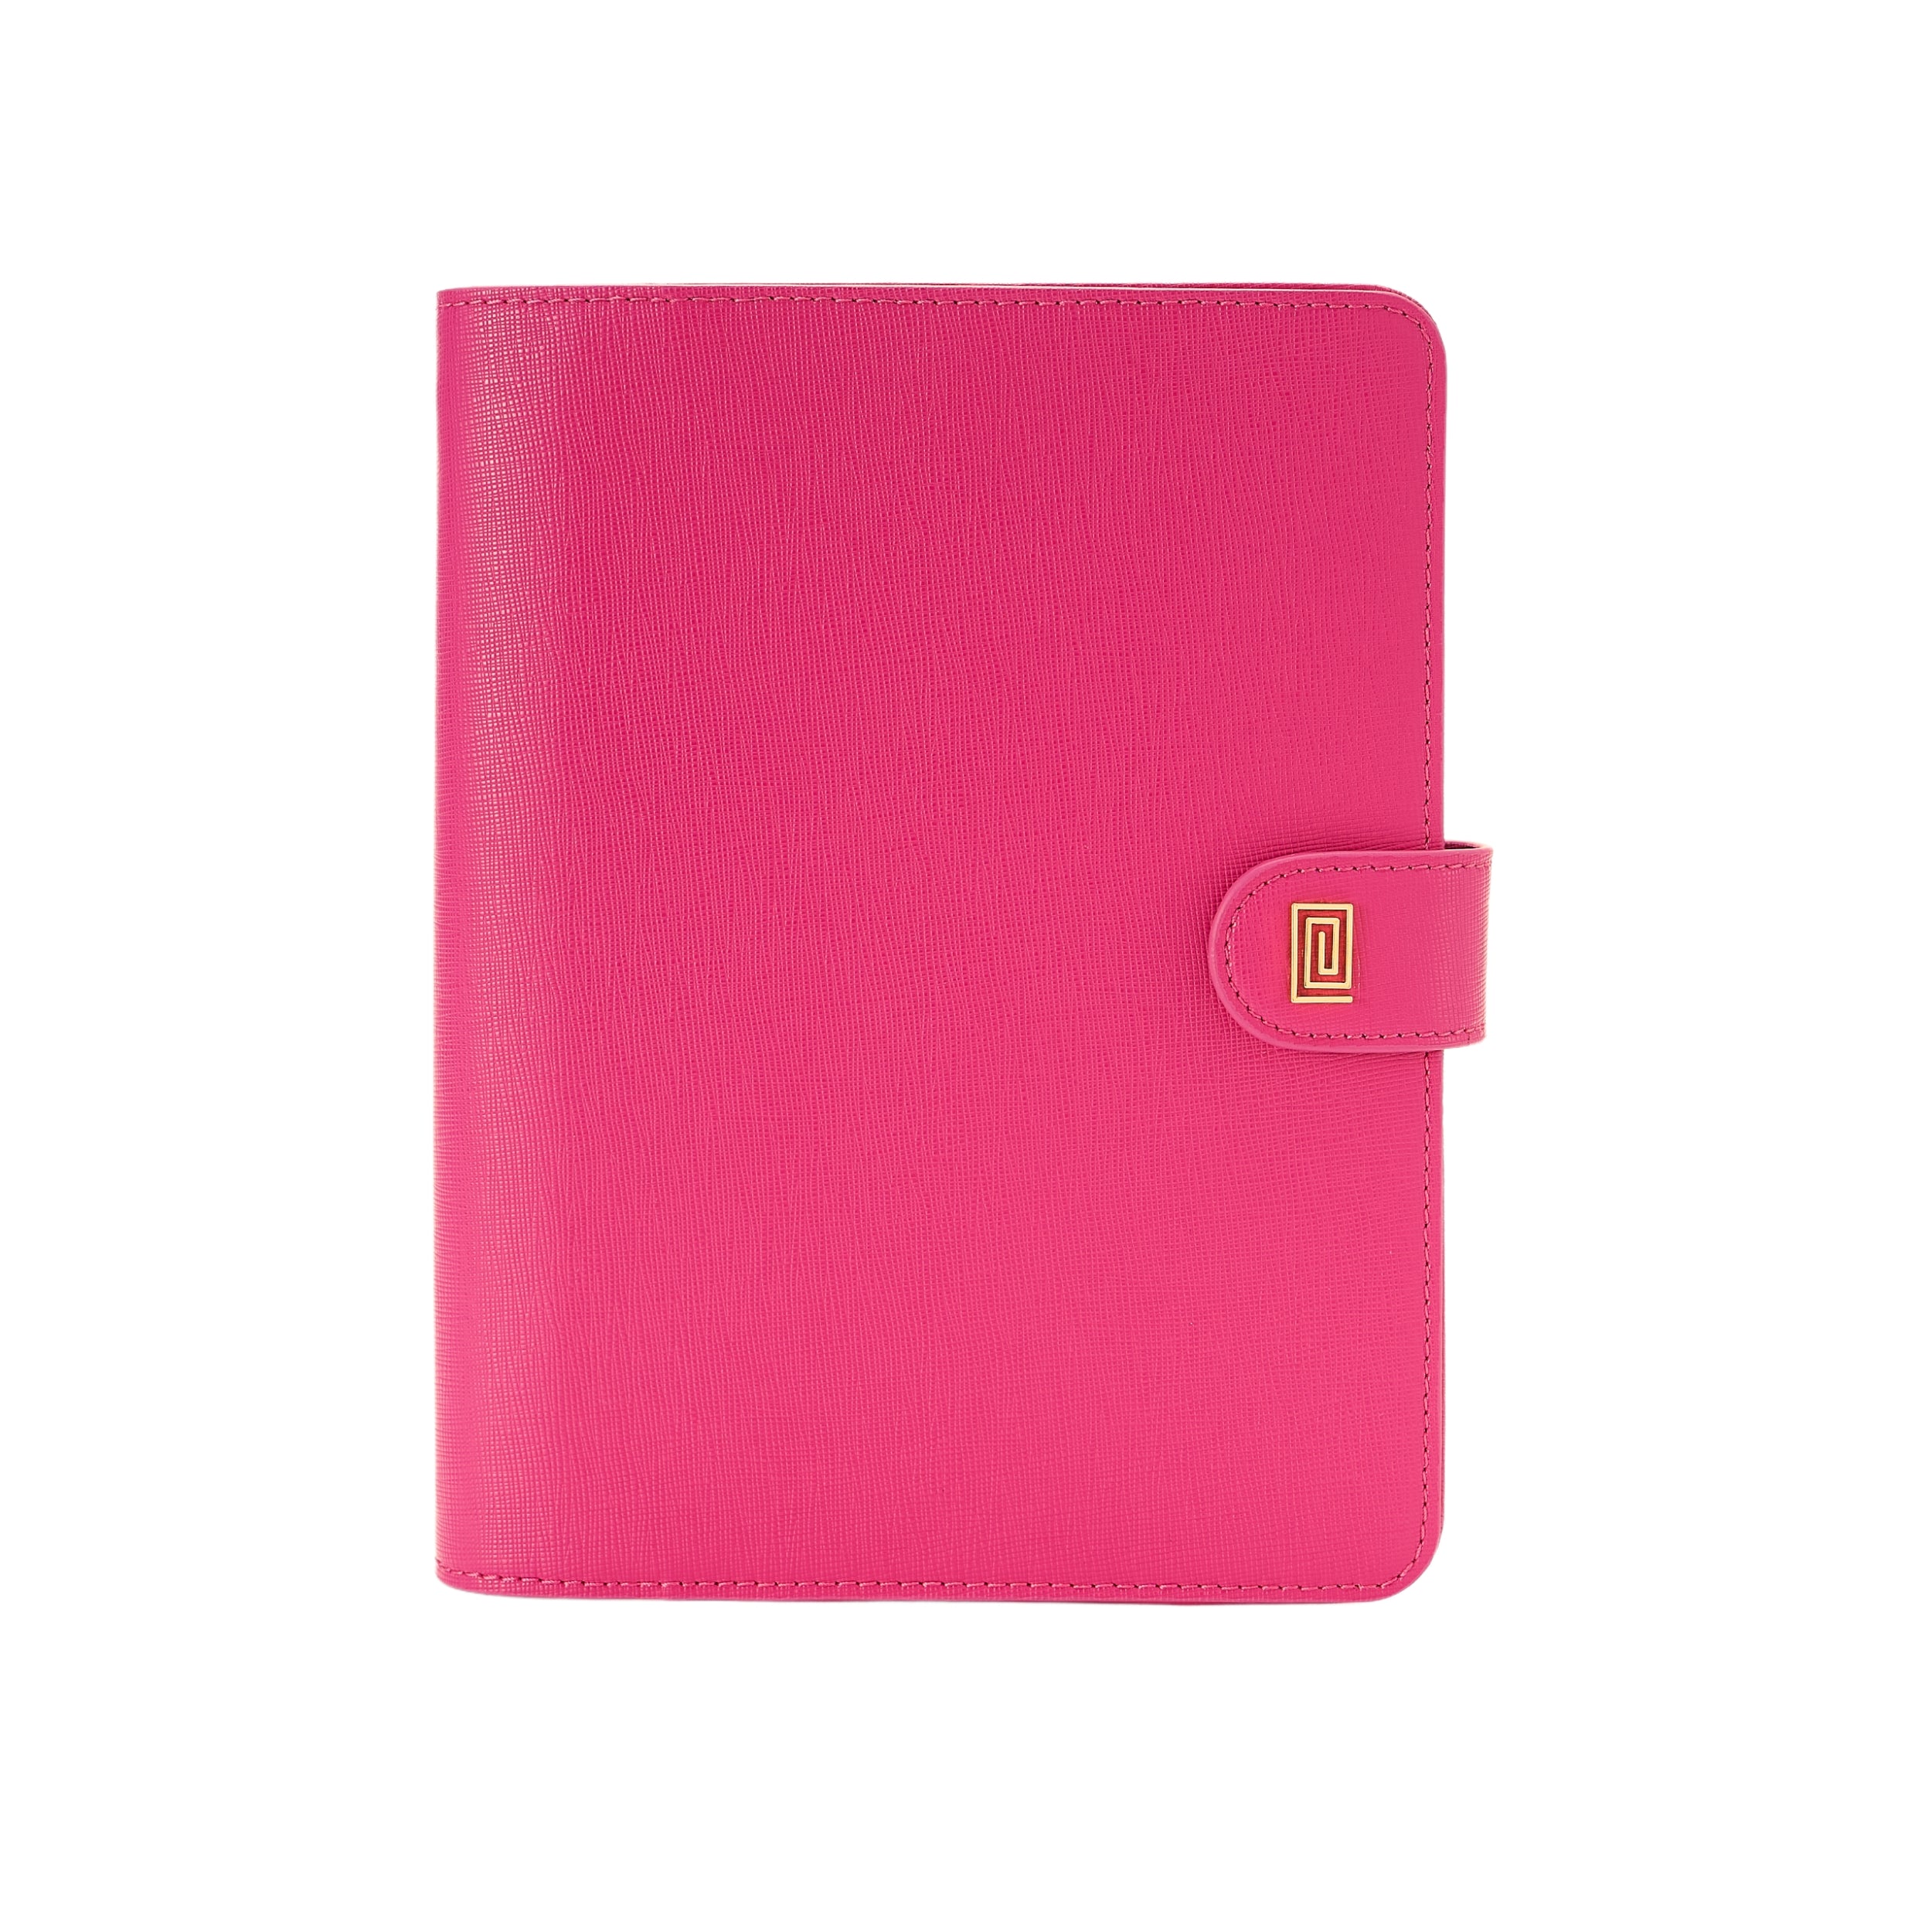 Pink Rose Saffiano Demi | OUTLET | MM4. Demi Ringless Agenda | Half Letter Planner Cover | Final Sale | NOTIQ